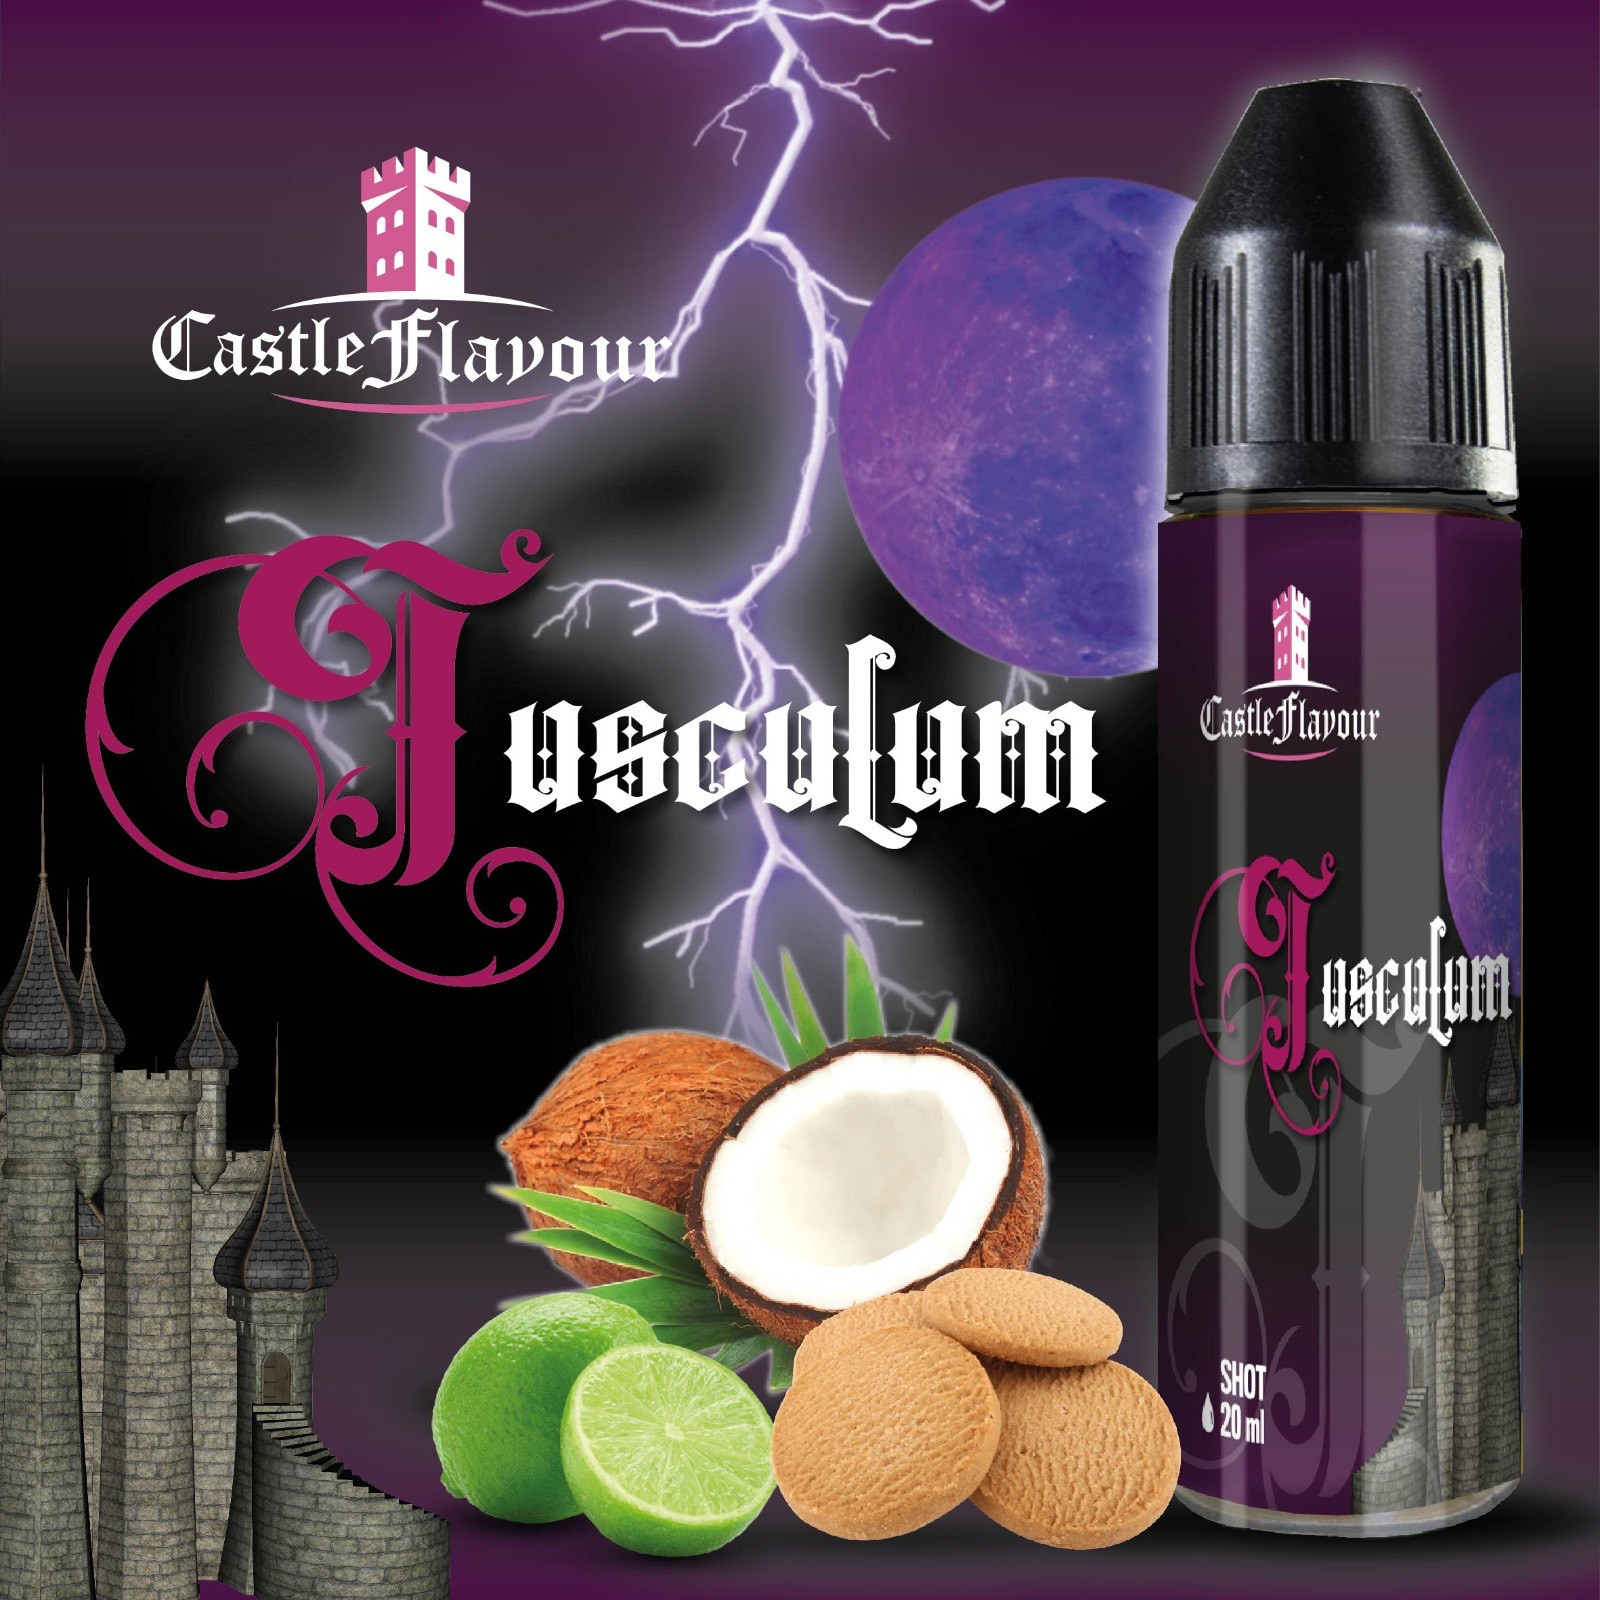 castle flavour Tusculum